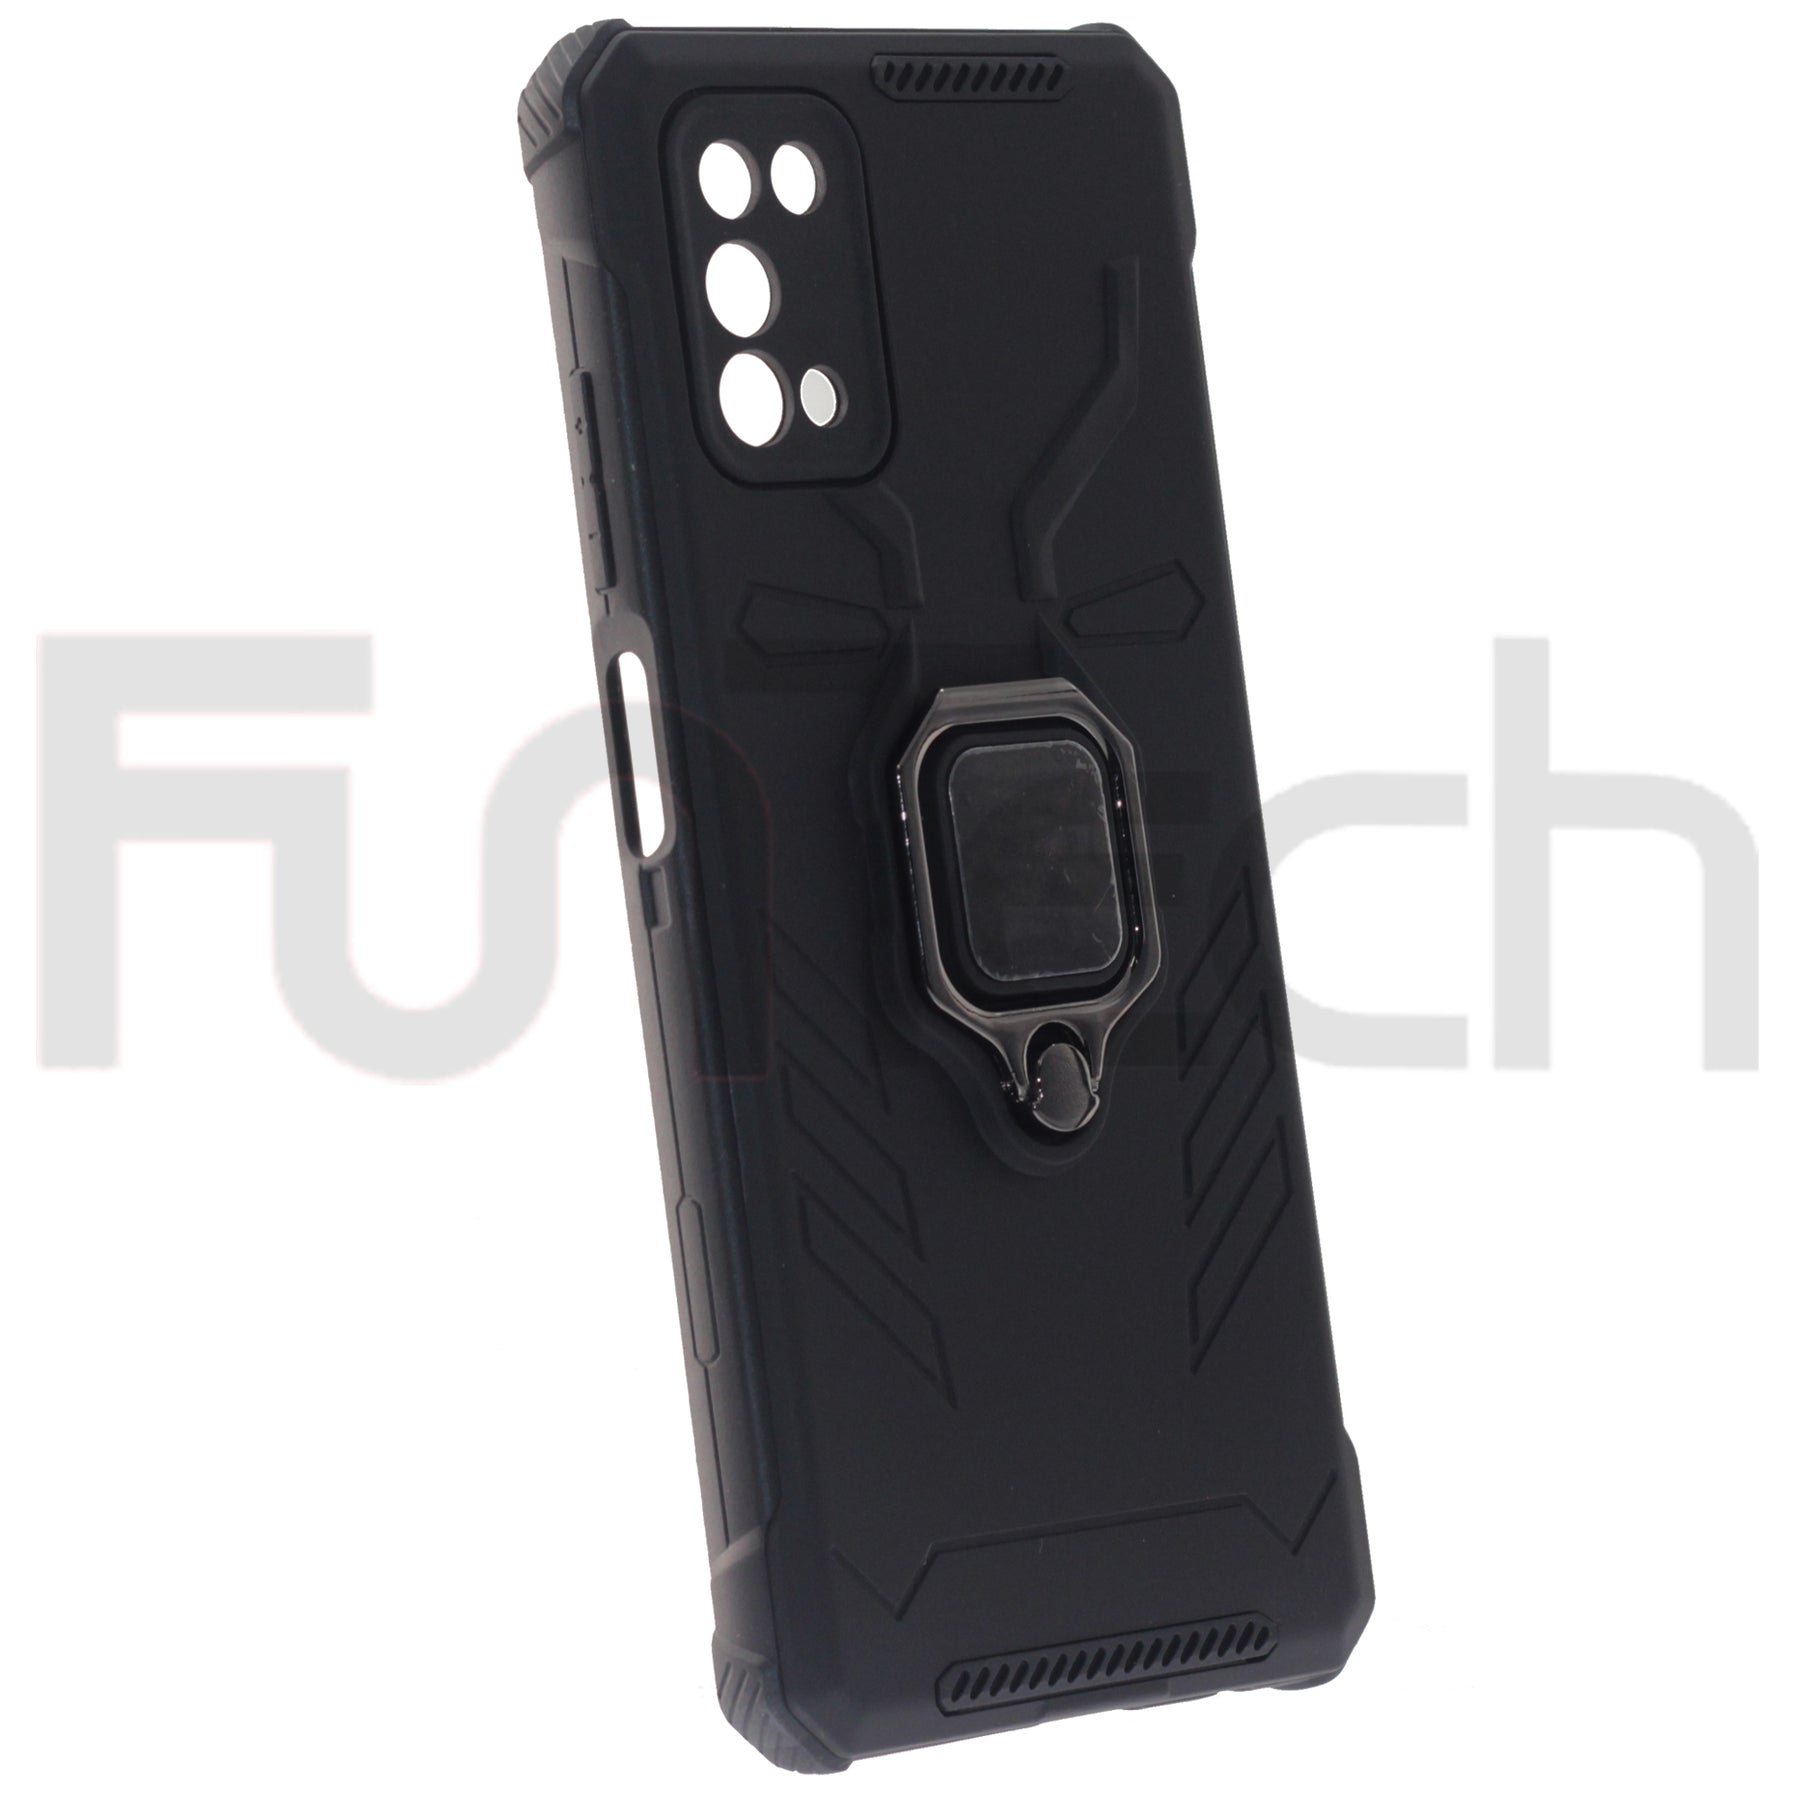 Samsung A02S, Armor Case, Color Black.